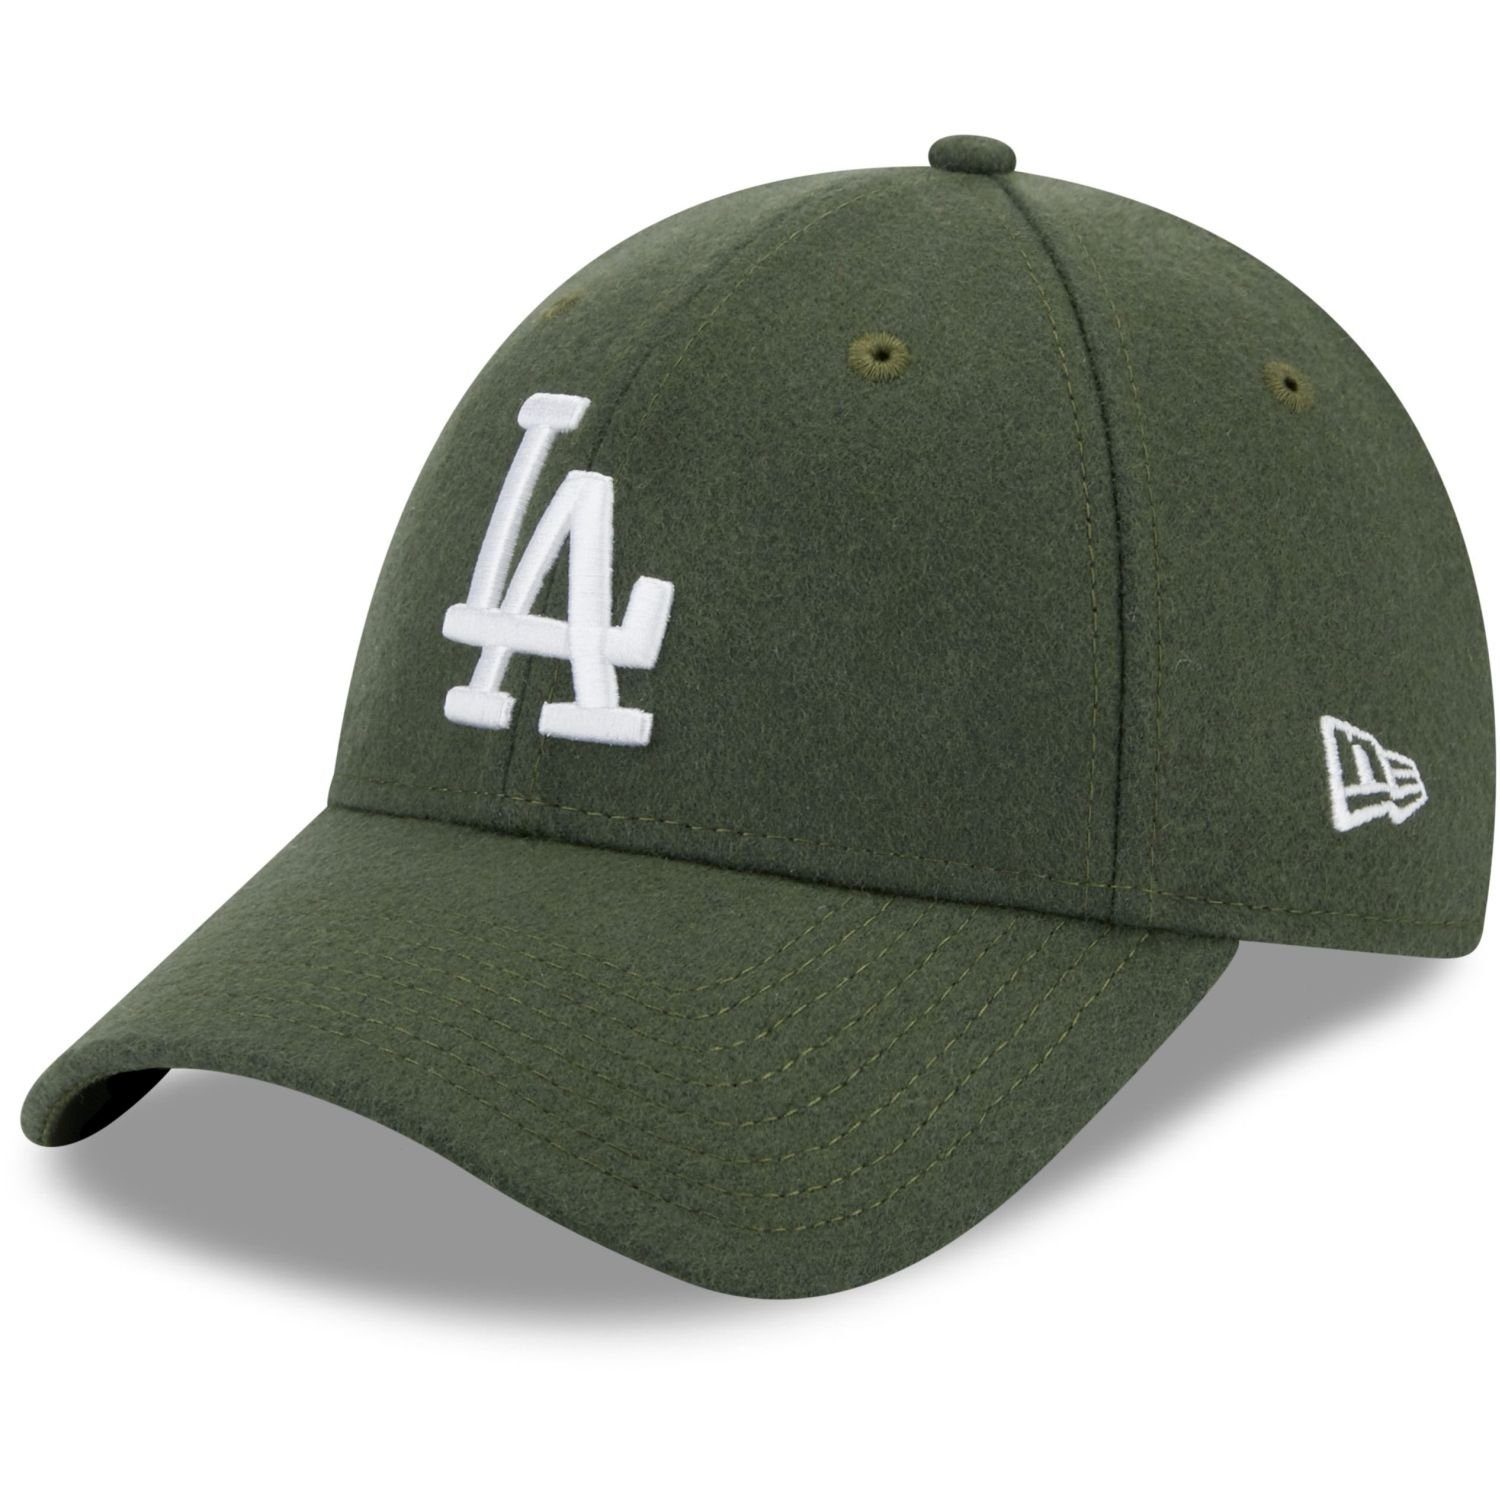 Los Baseball WOOL Dodgers 9Forty Angeles Cap New green oliv-meliert Era